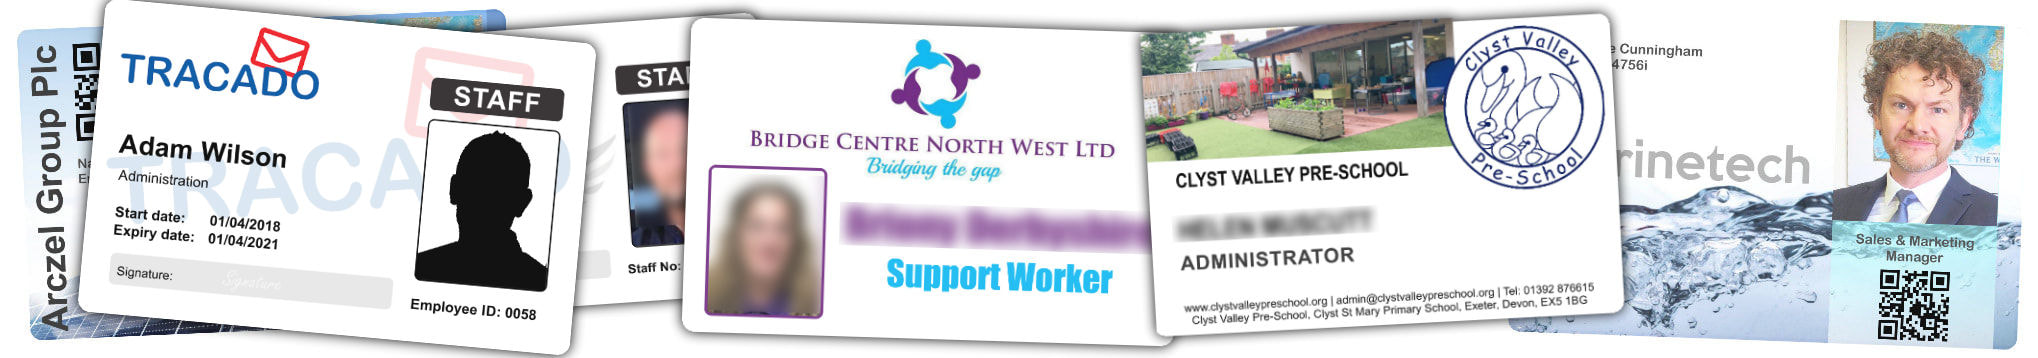 Dundee staff ID card printing | employee photo ID cards | company employee ID card print service | Local Identity Card Printing | Custom Design 